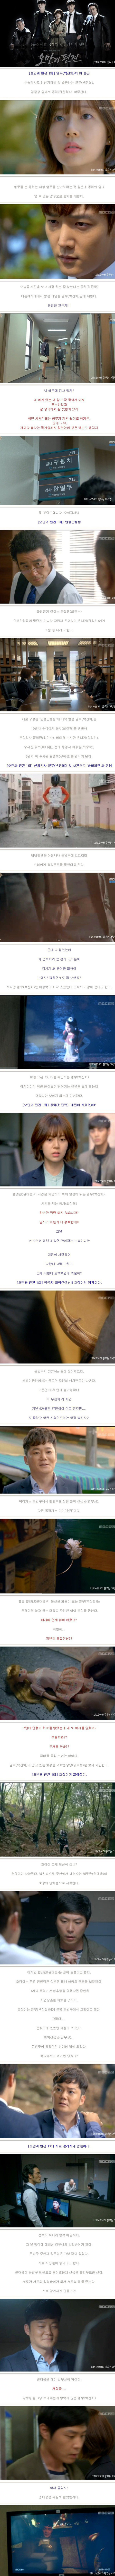 episode 1 captures for the Korean drama 'Pride and Prejudice'